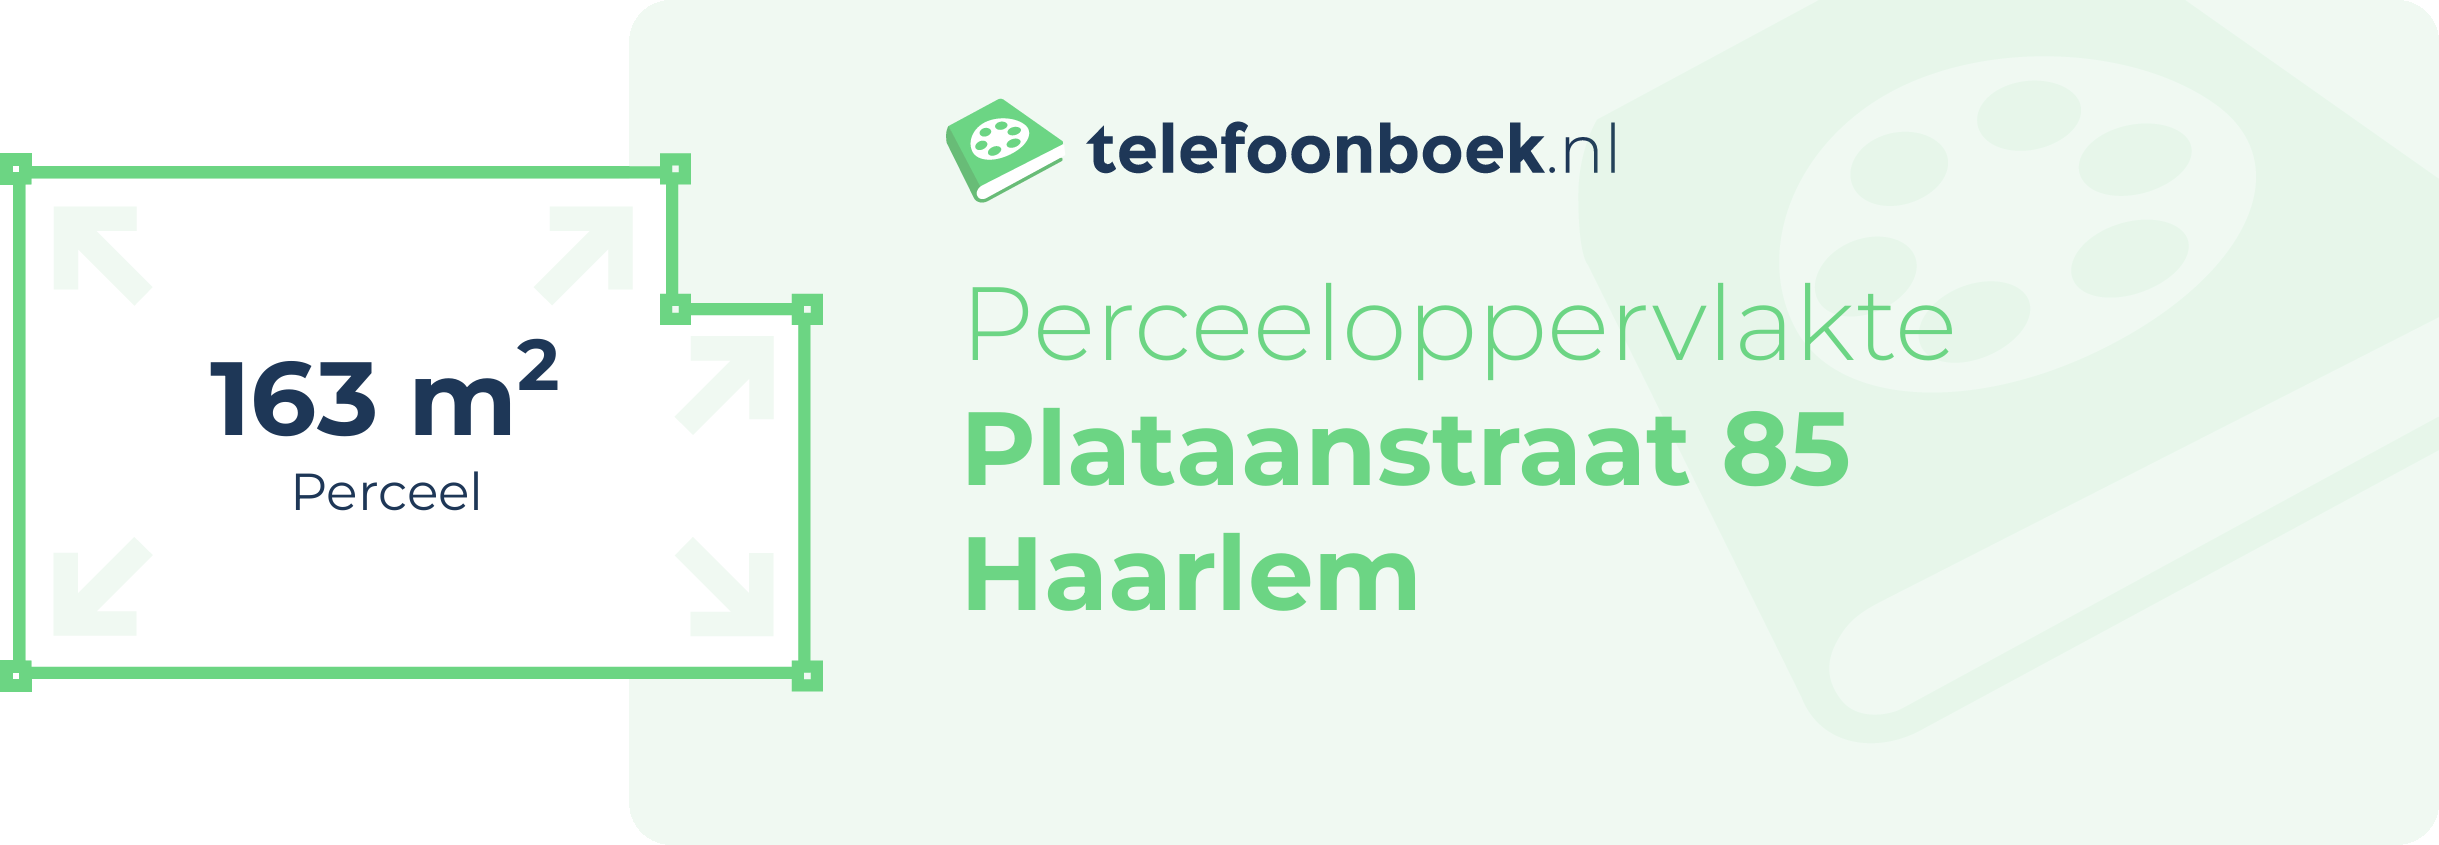 Perceeloppervlakte Plataanstraat 85 Haarlem